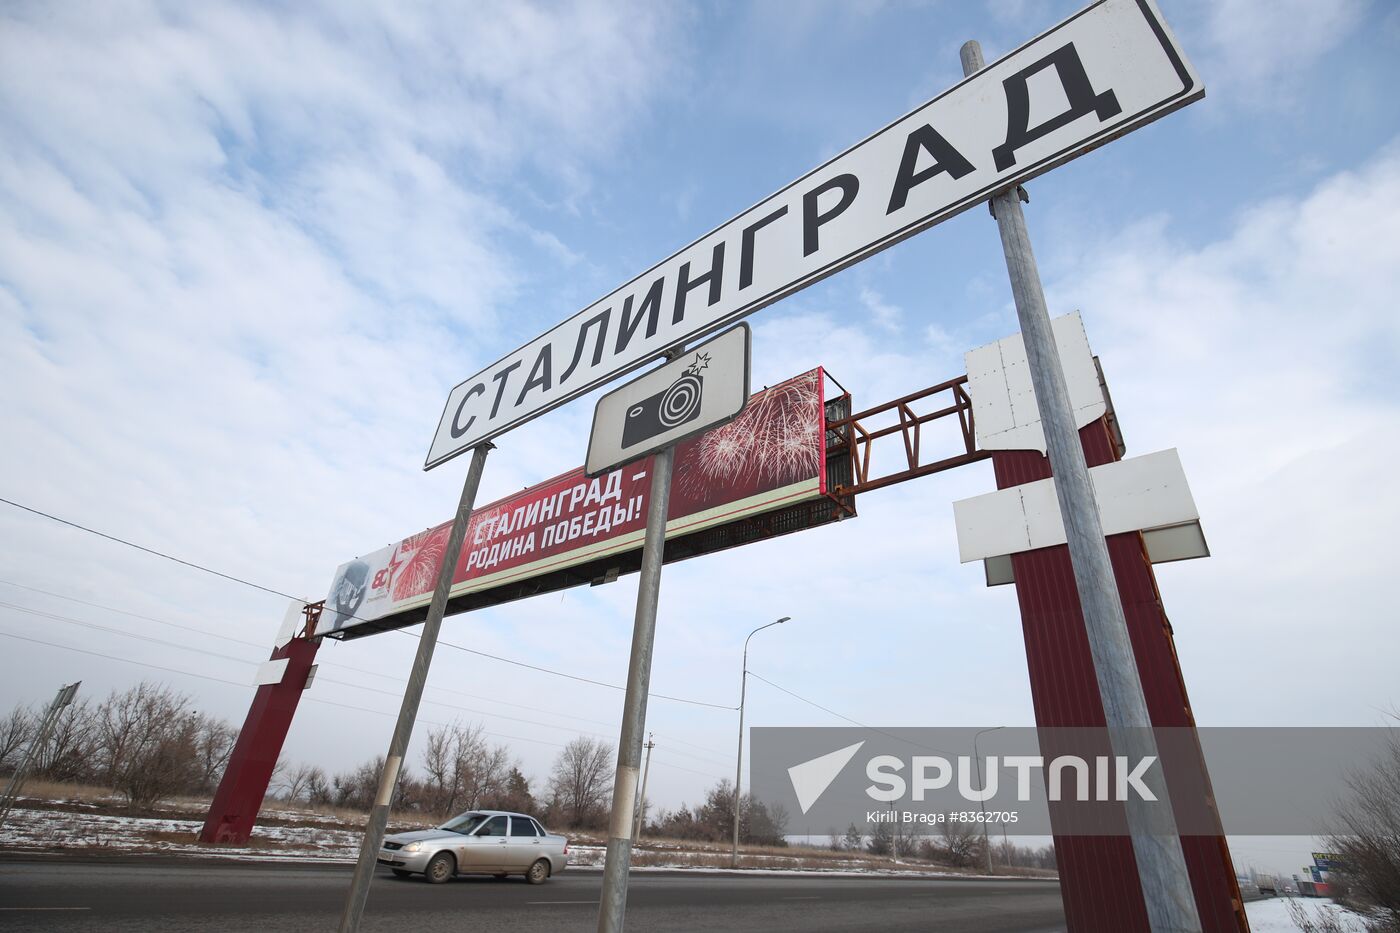 Russia WWII Stalingrad Battle Anniversary Road Signs